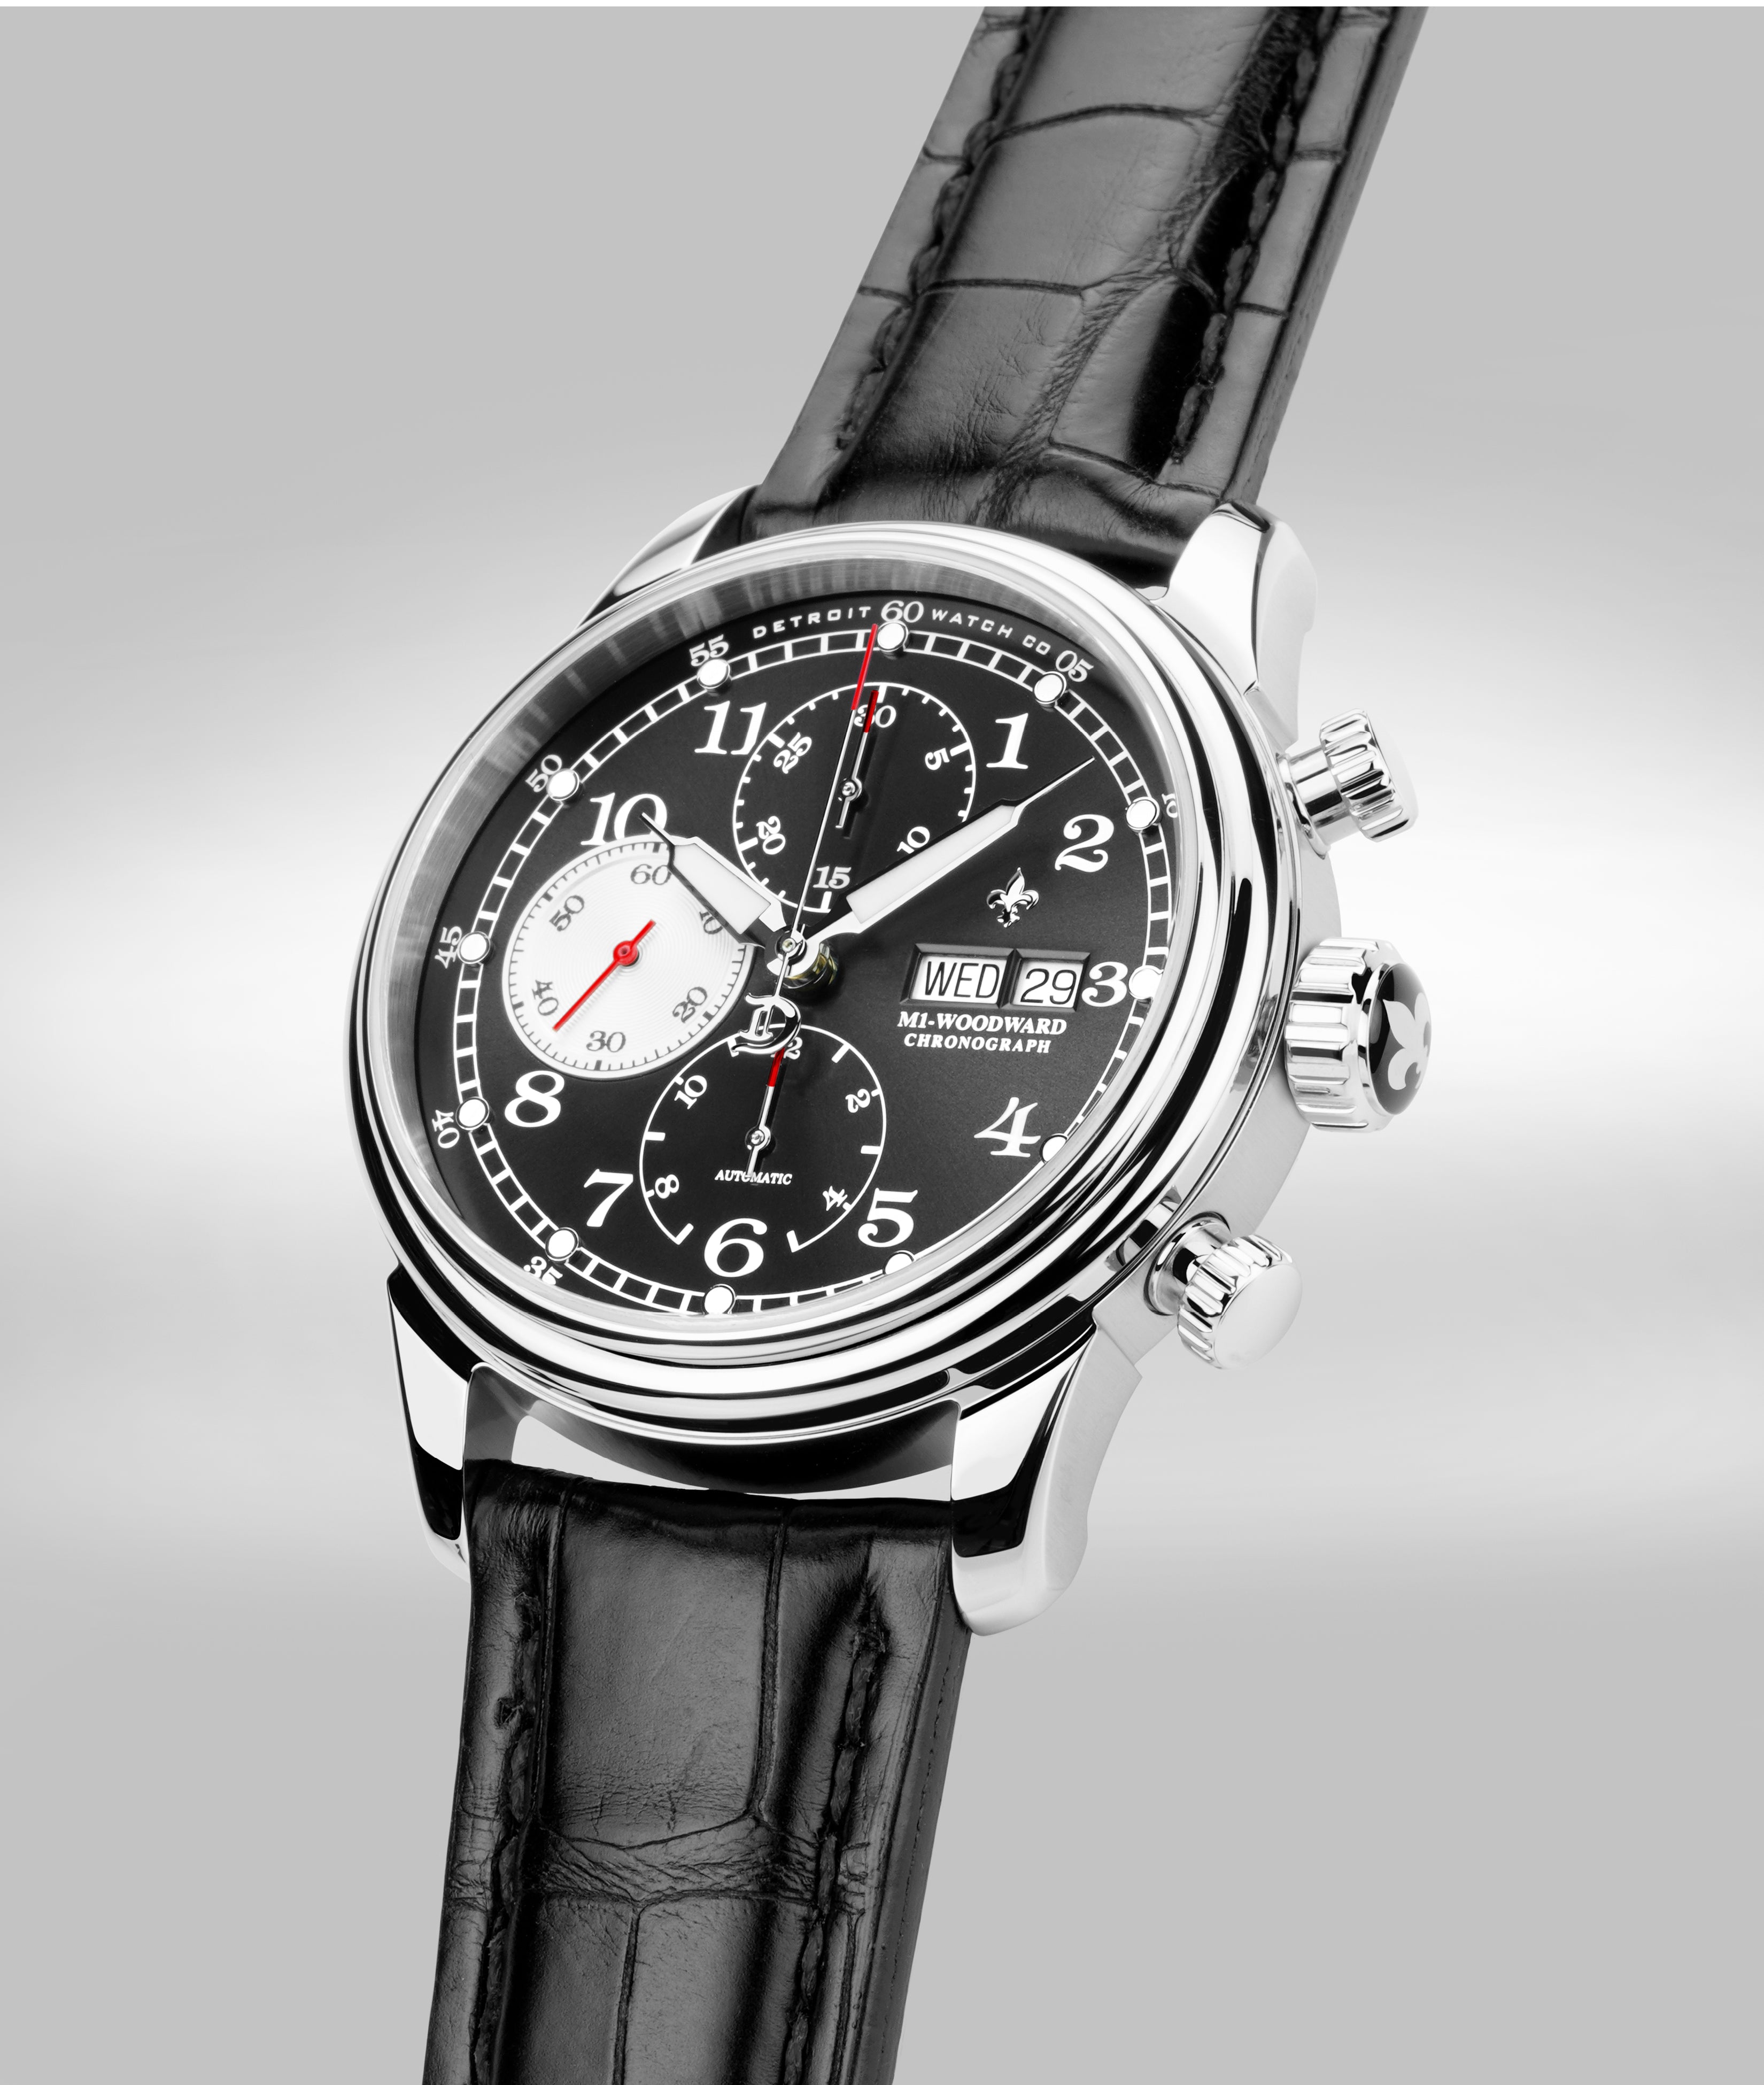 graphite race chronograph watch